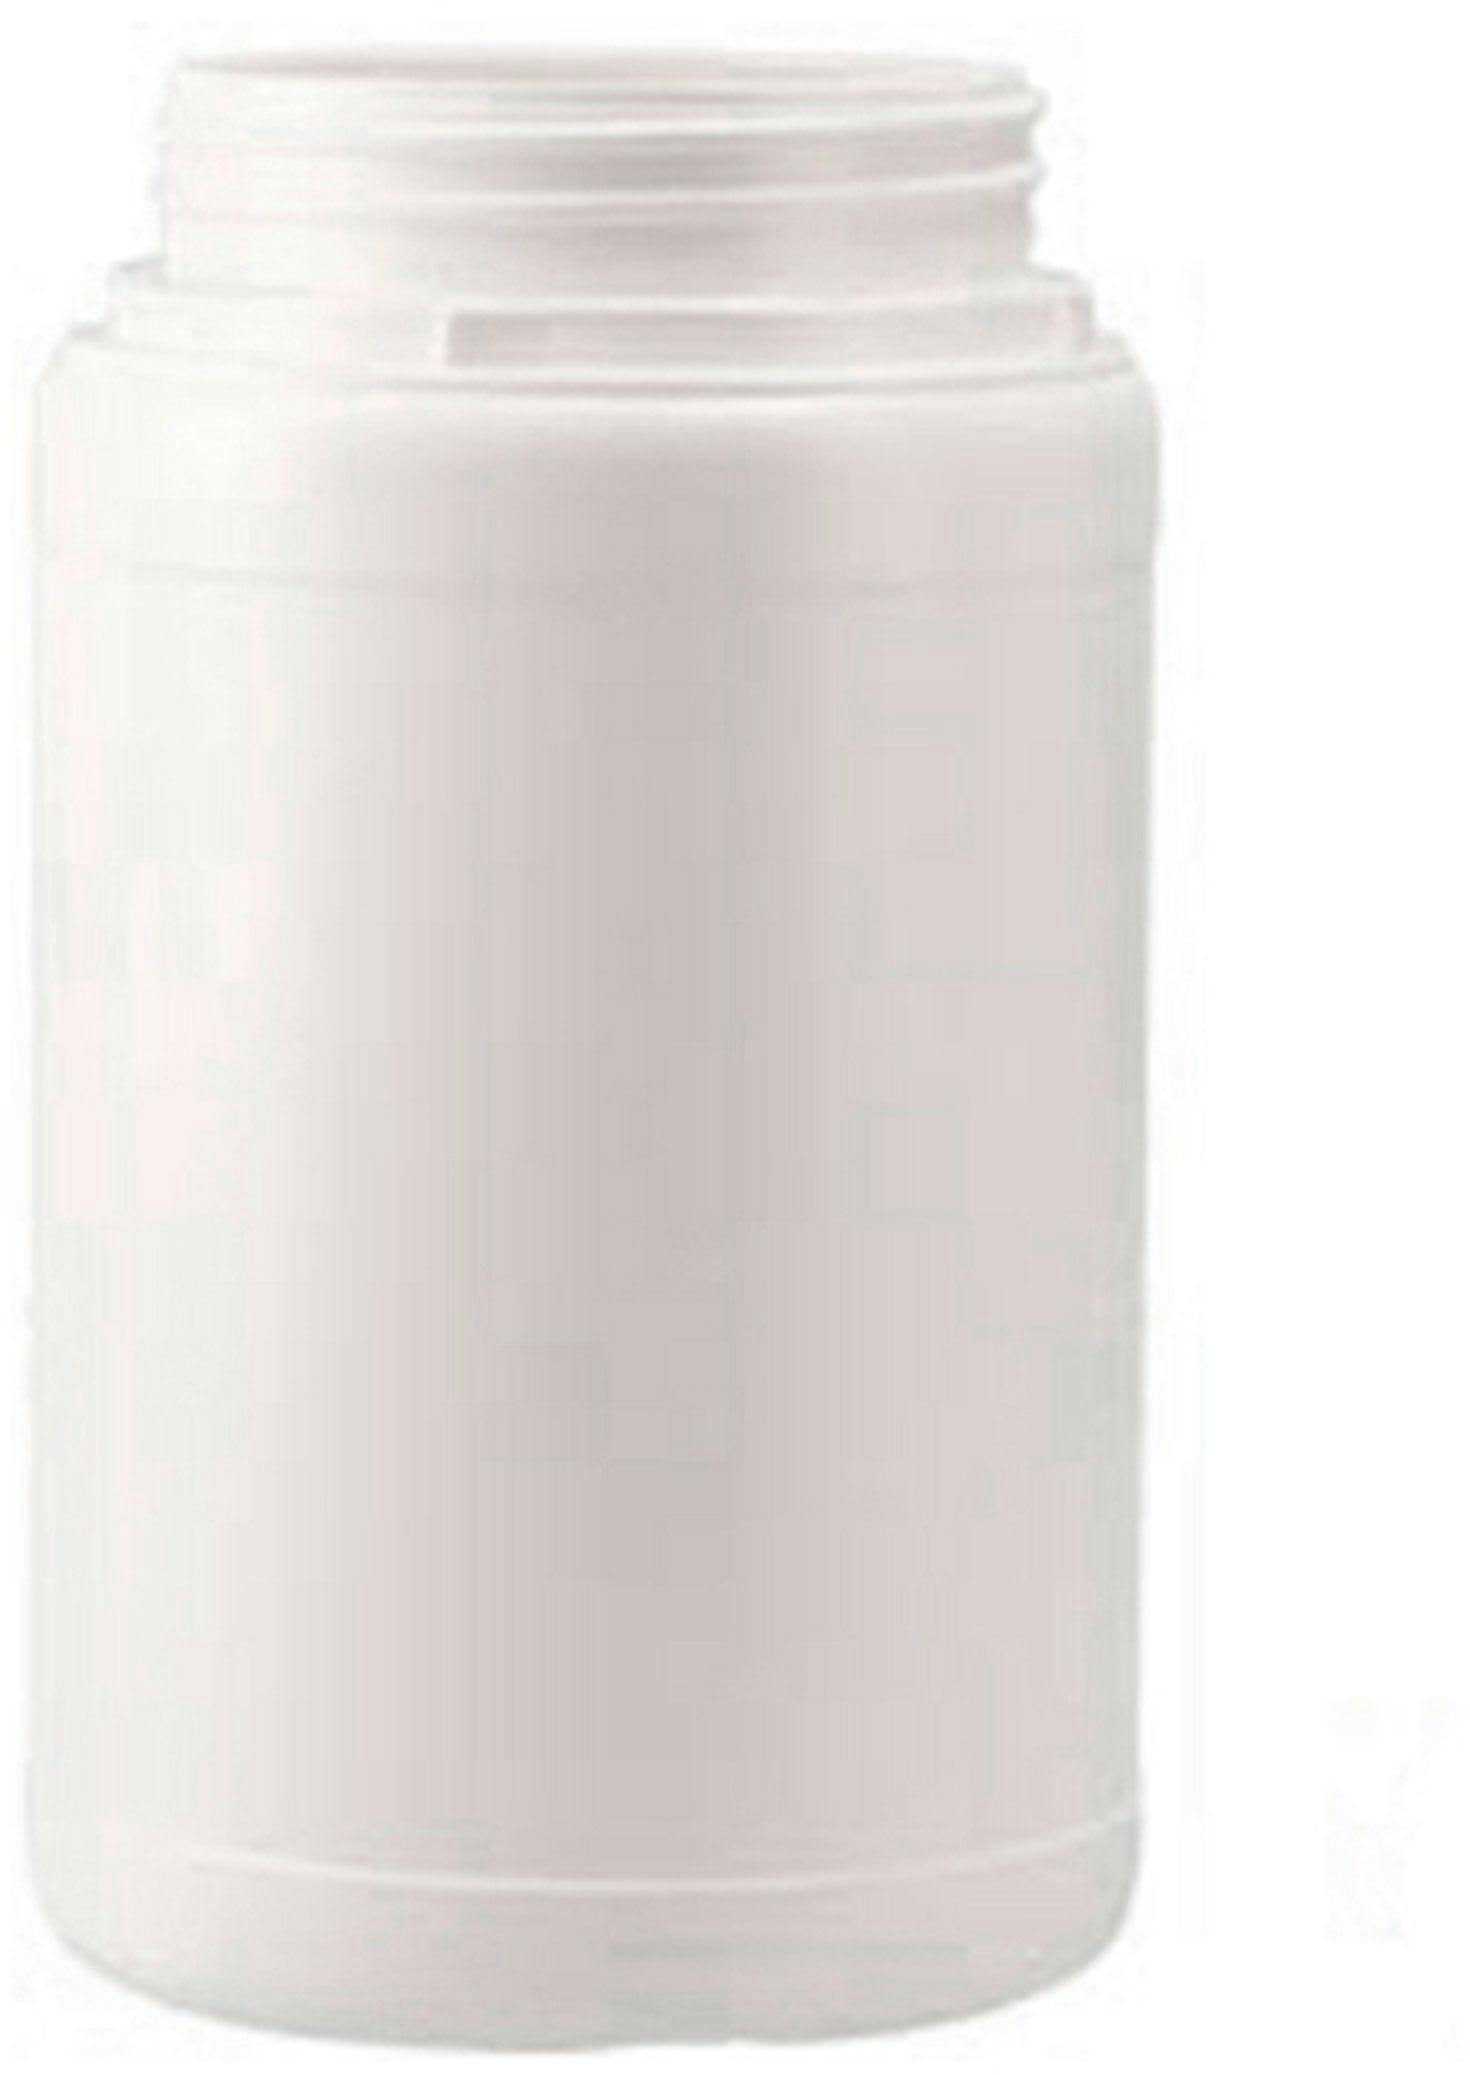 Jar HDPE 1 liter white  D80